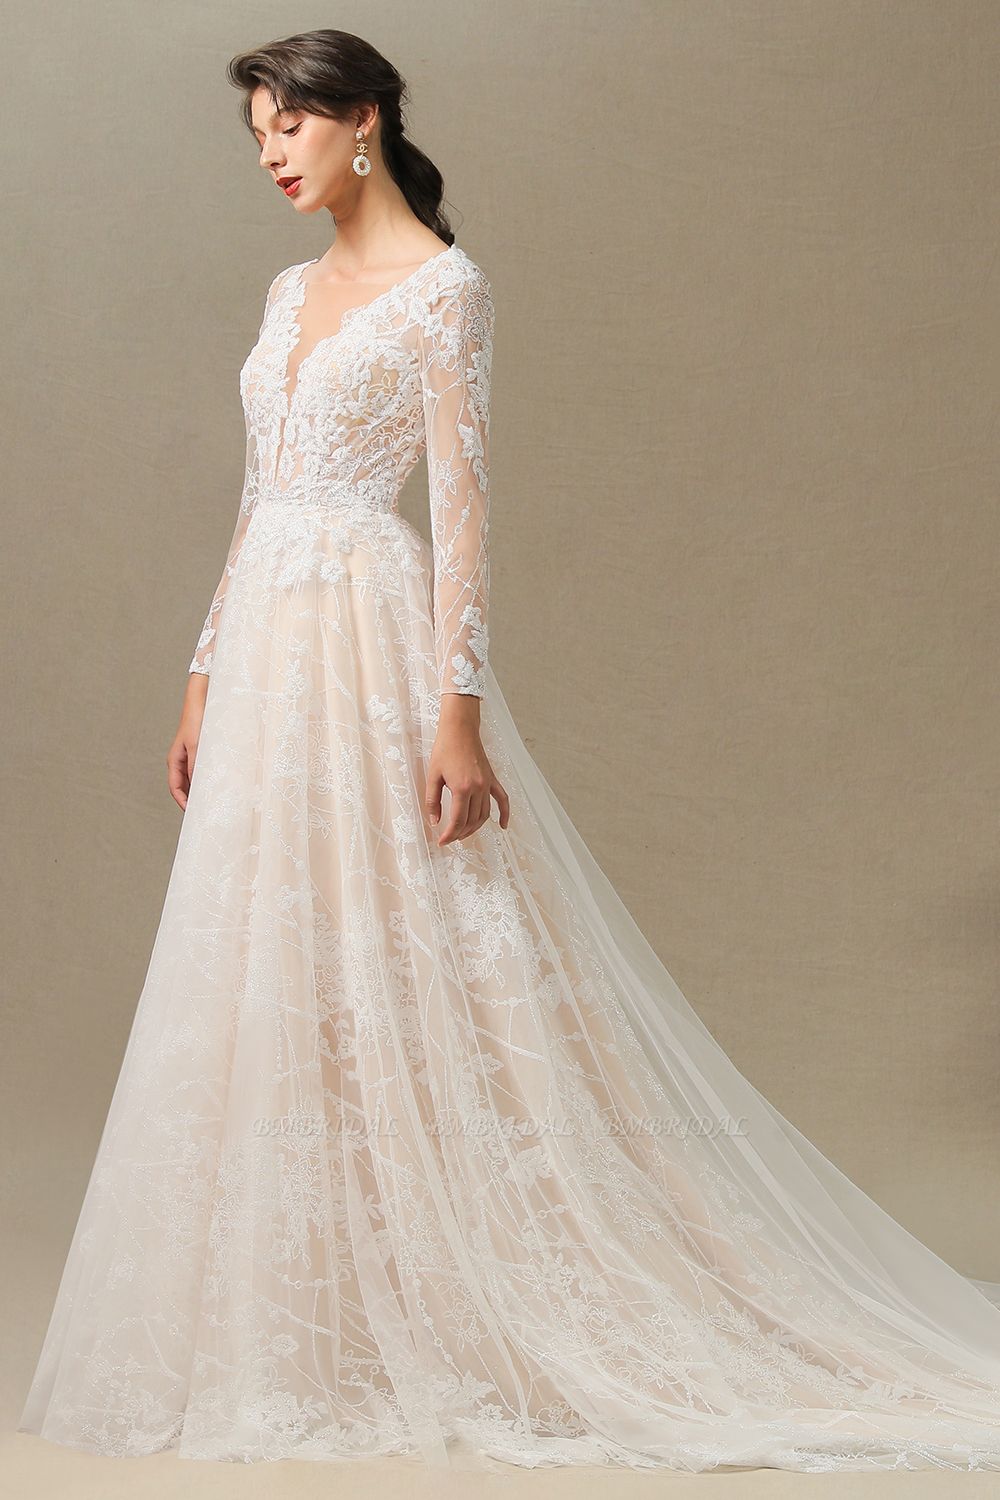 BMbridal Long Sleeves Lace Wedding Dress Online | BmBridal